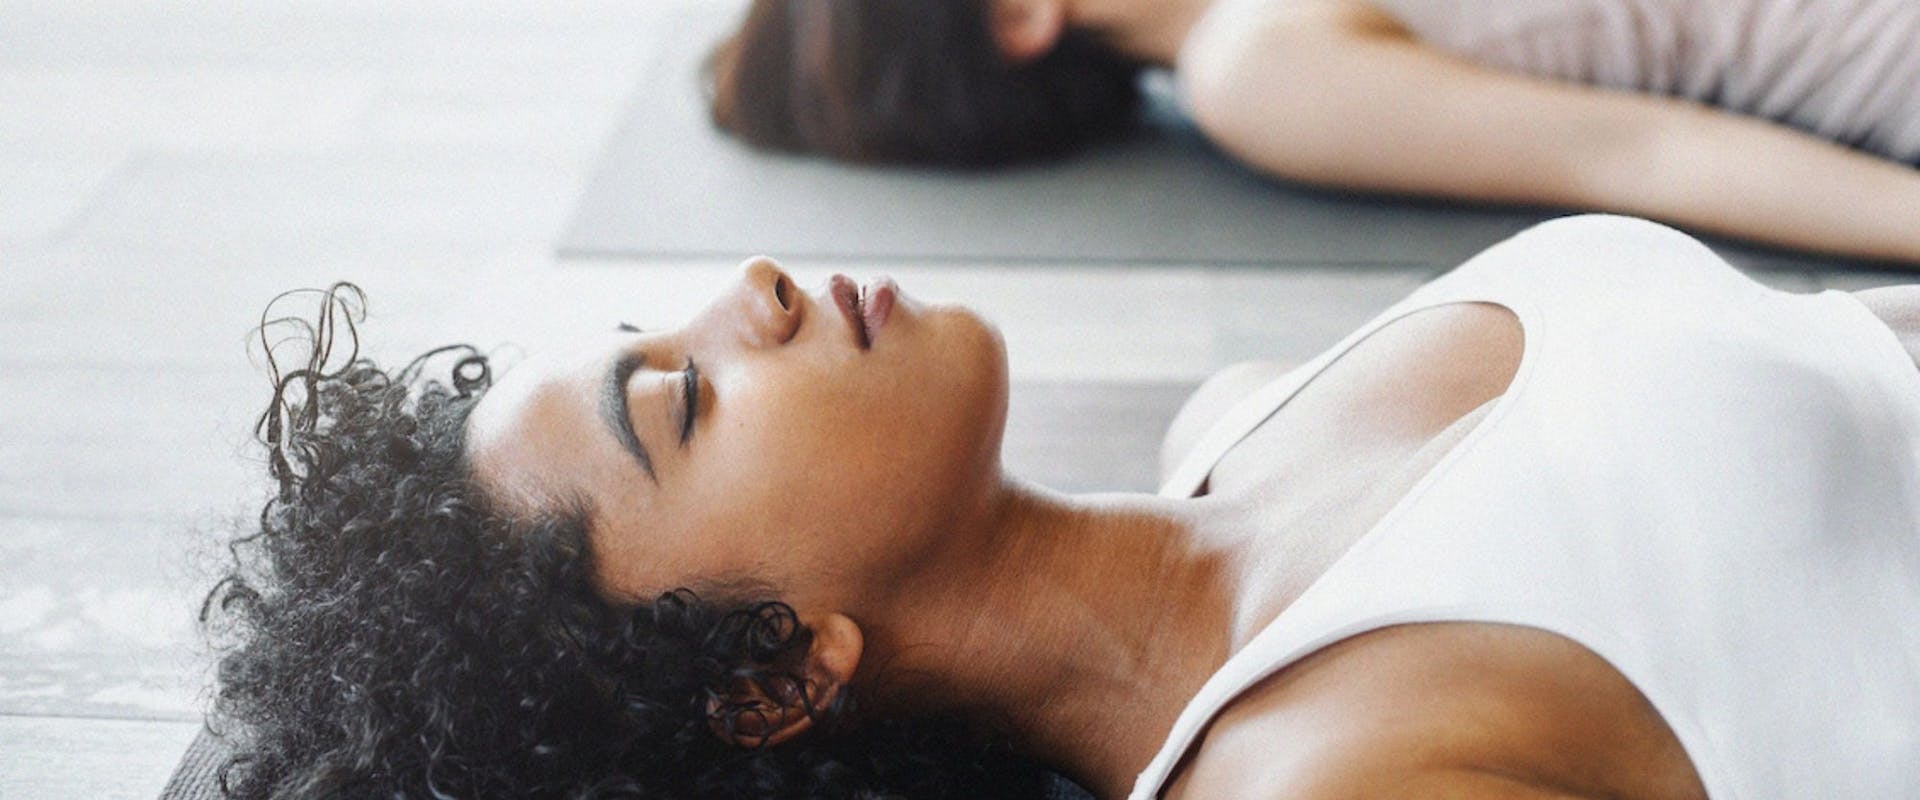 Is yoga nidra the secret solution to burnout?